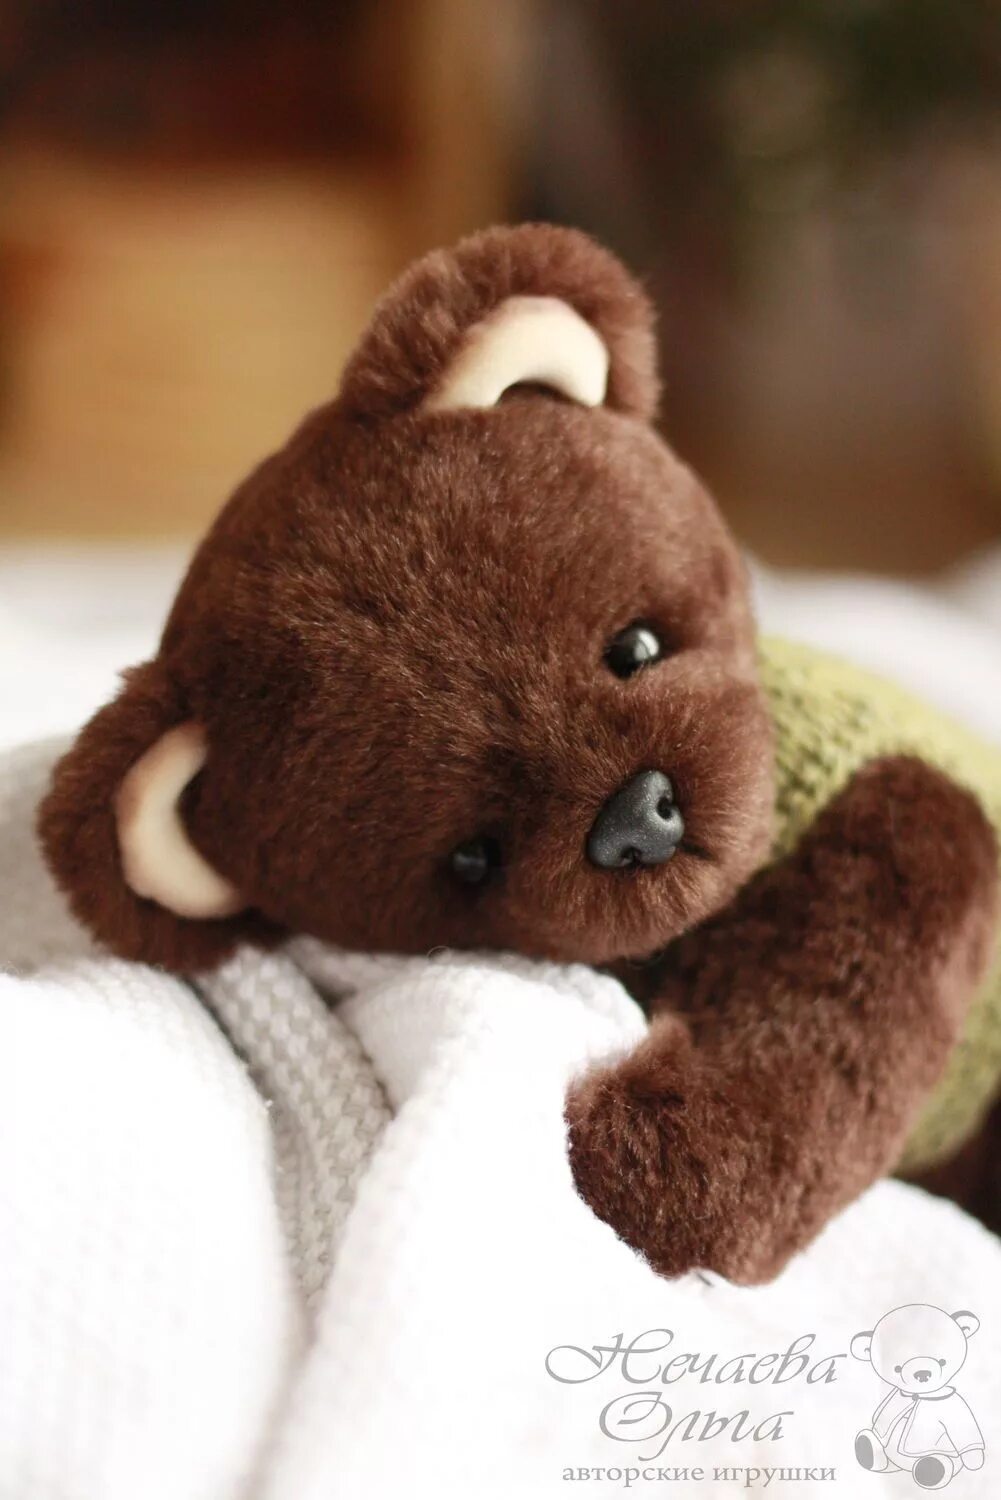 A brown teddy bear. Мишка Тедди Беар коричневый. Плюшевый мишка коричневый. Коричневая мягкая игрушка. Коричневый плюшевый мишка игрушки.